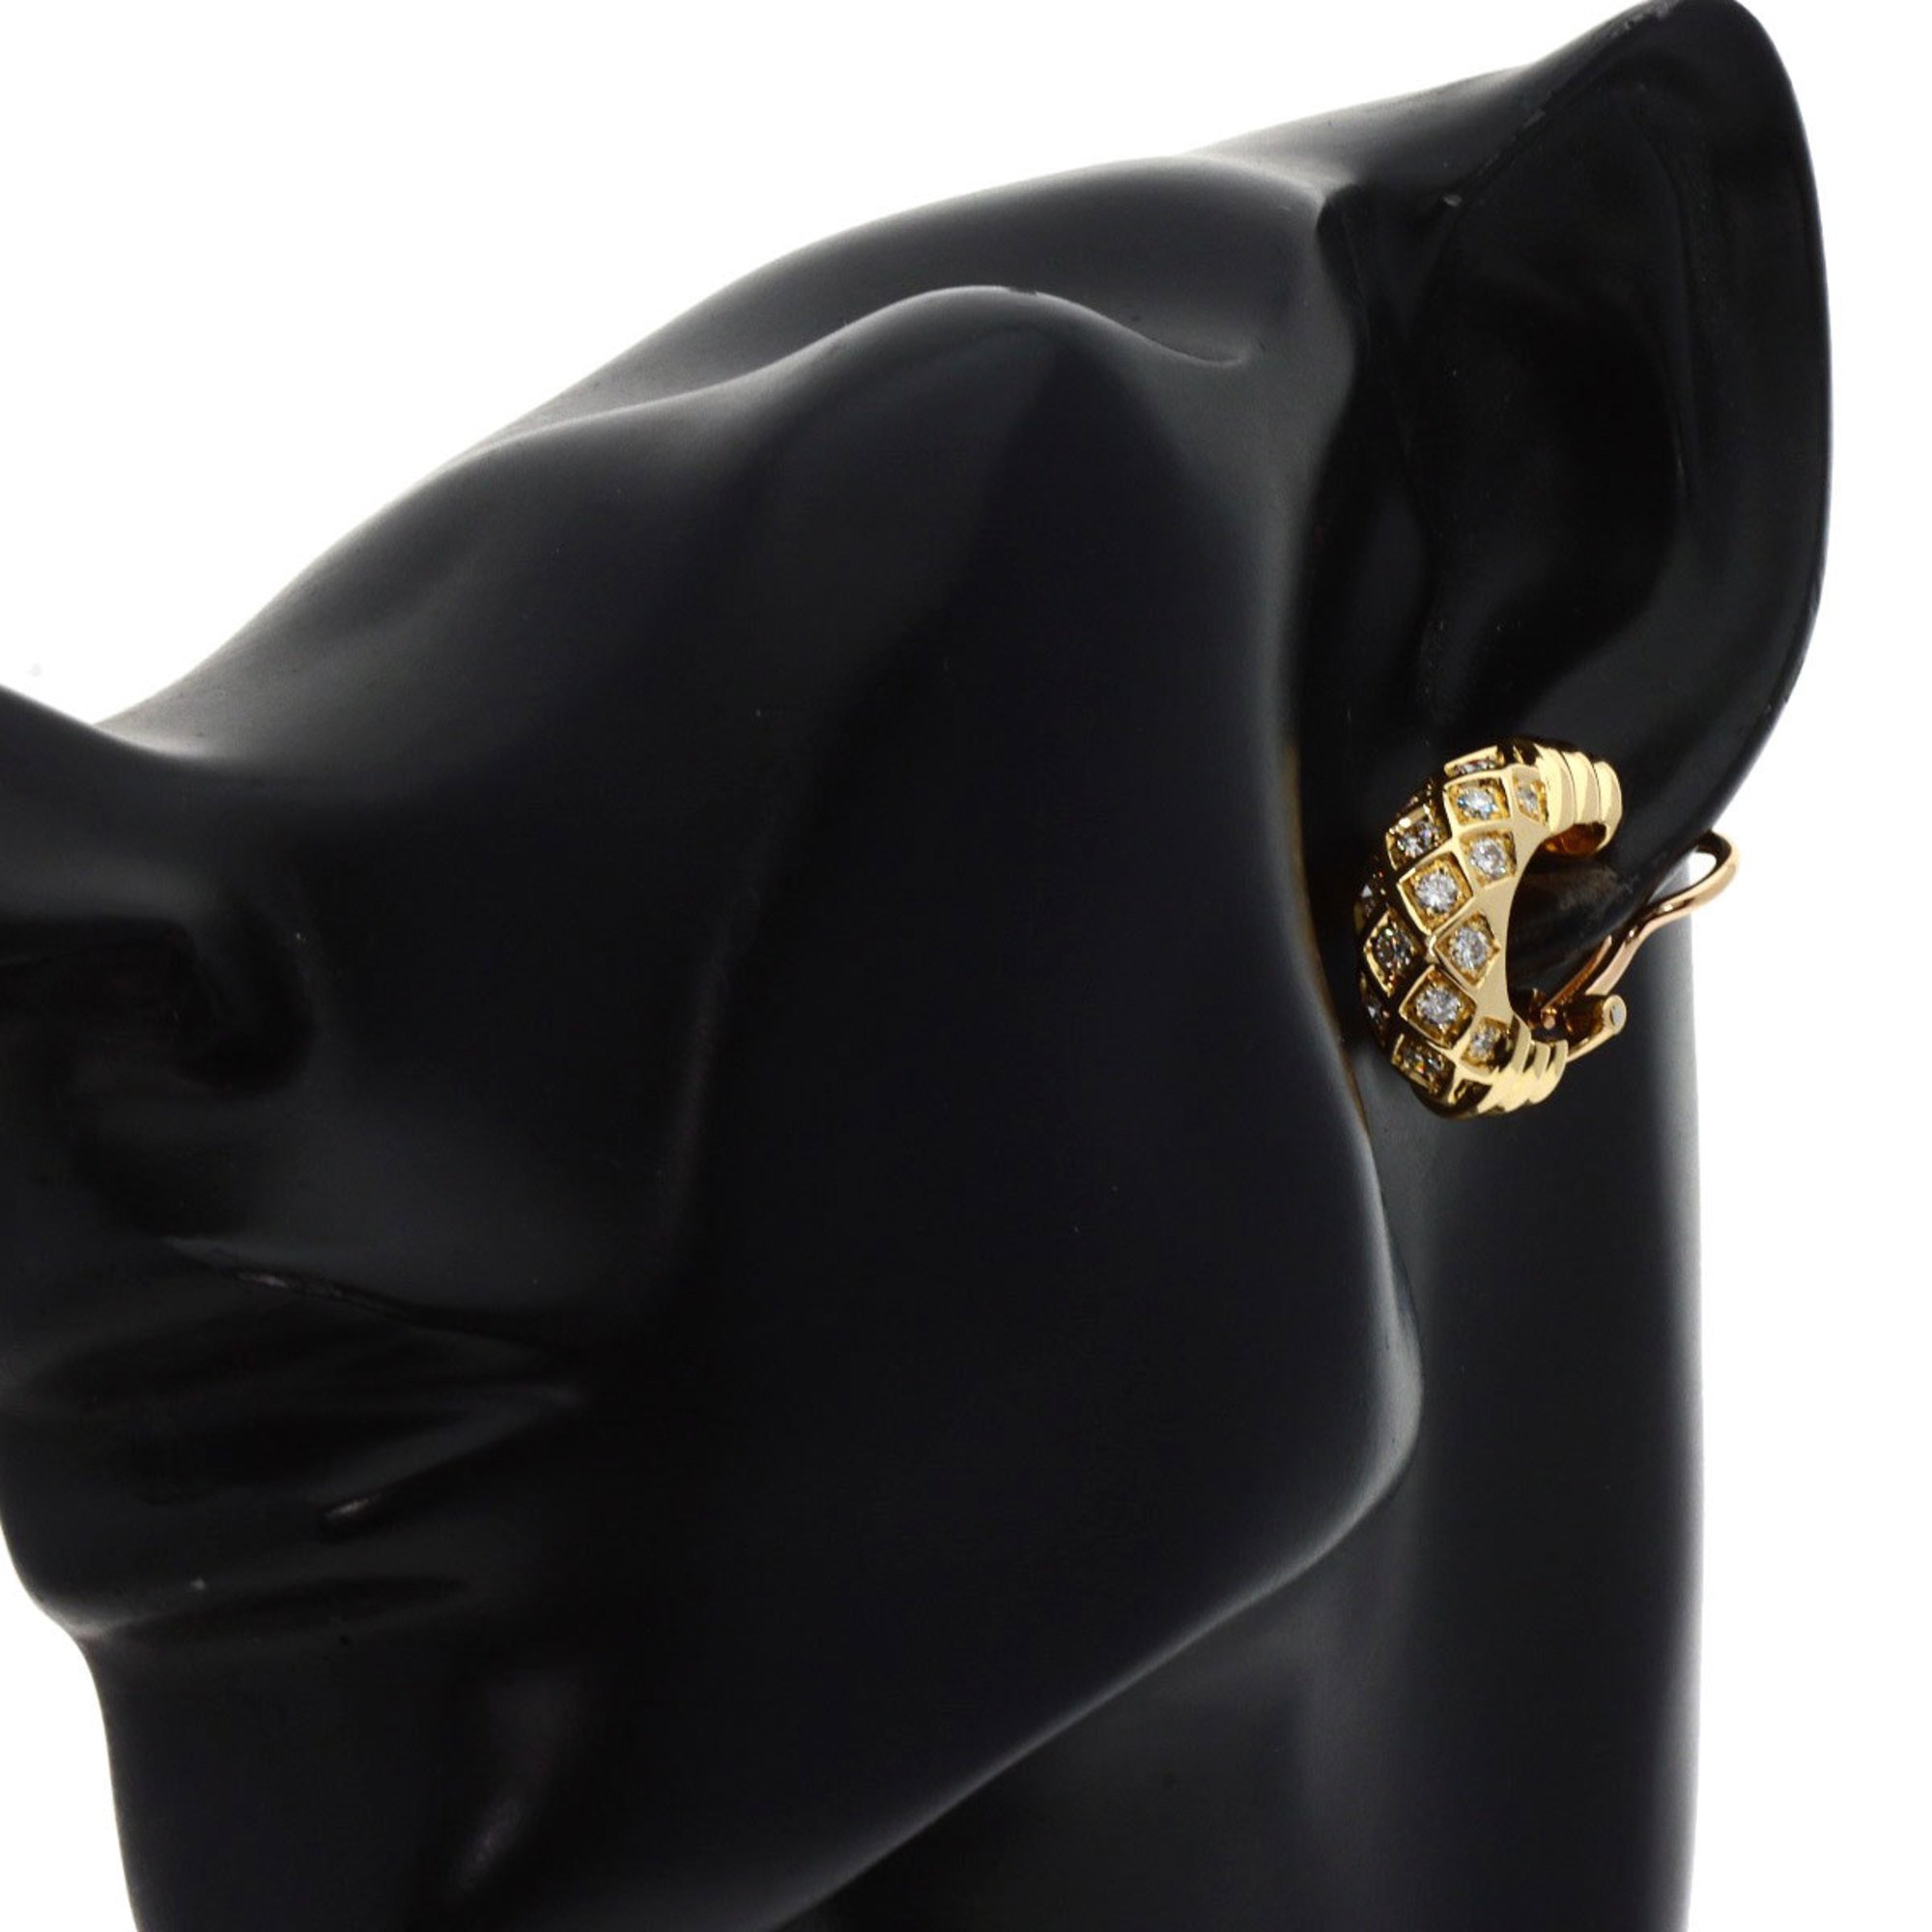 Cartier Diamond Earrings K18 Yellow Gold for Women